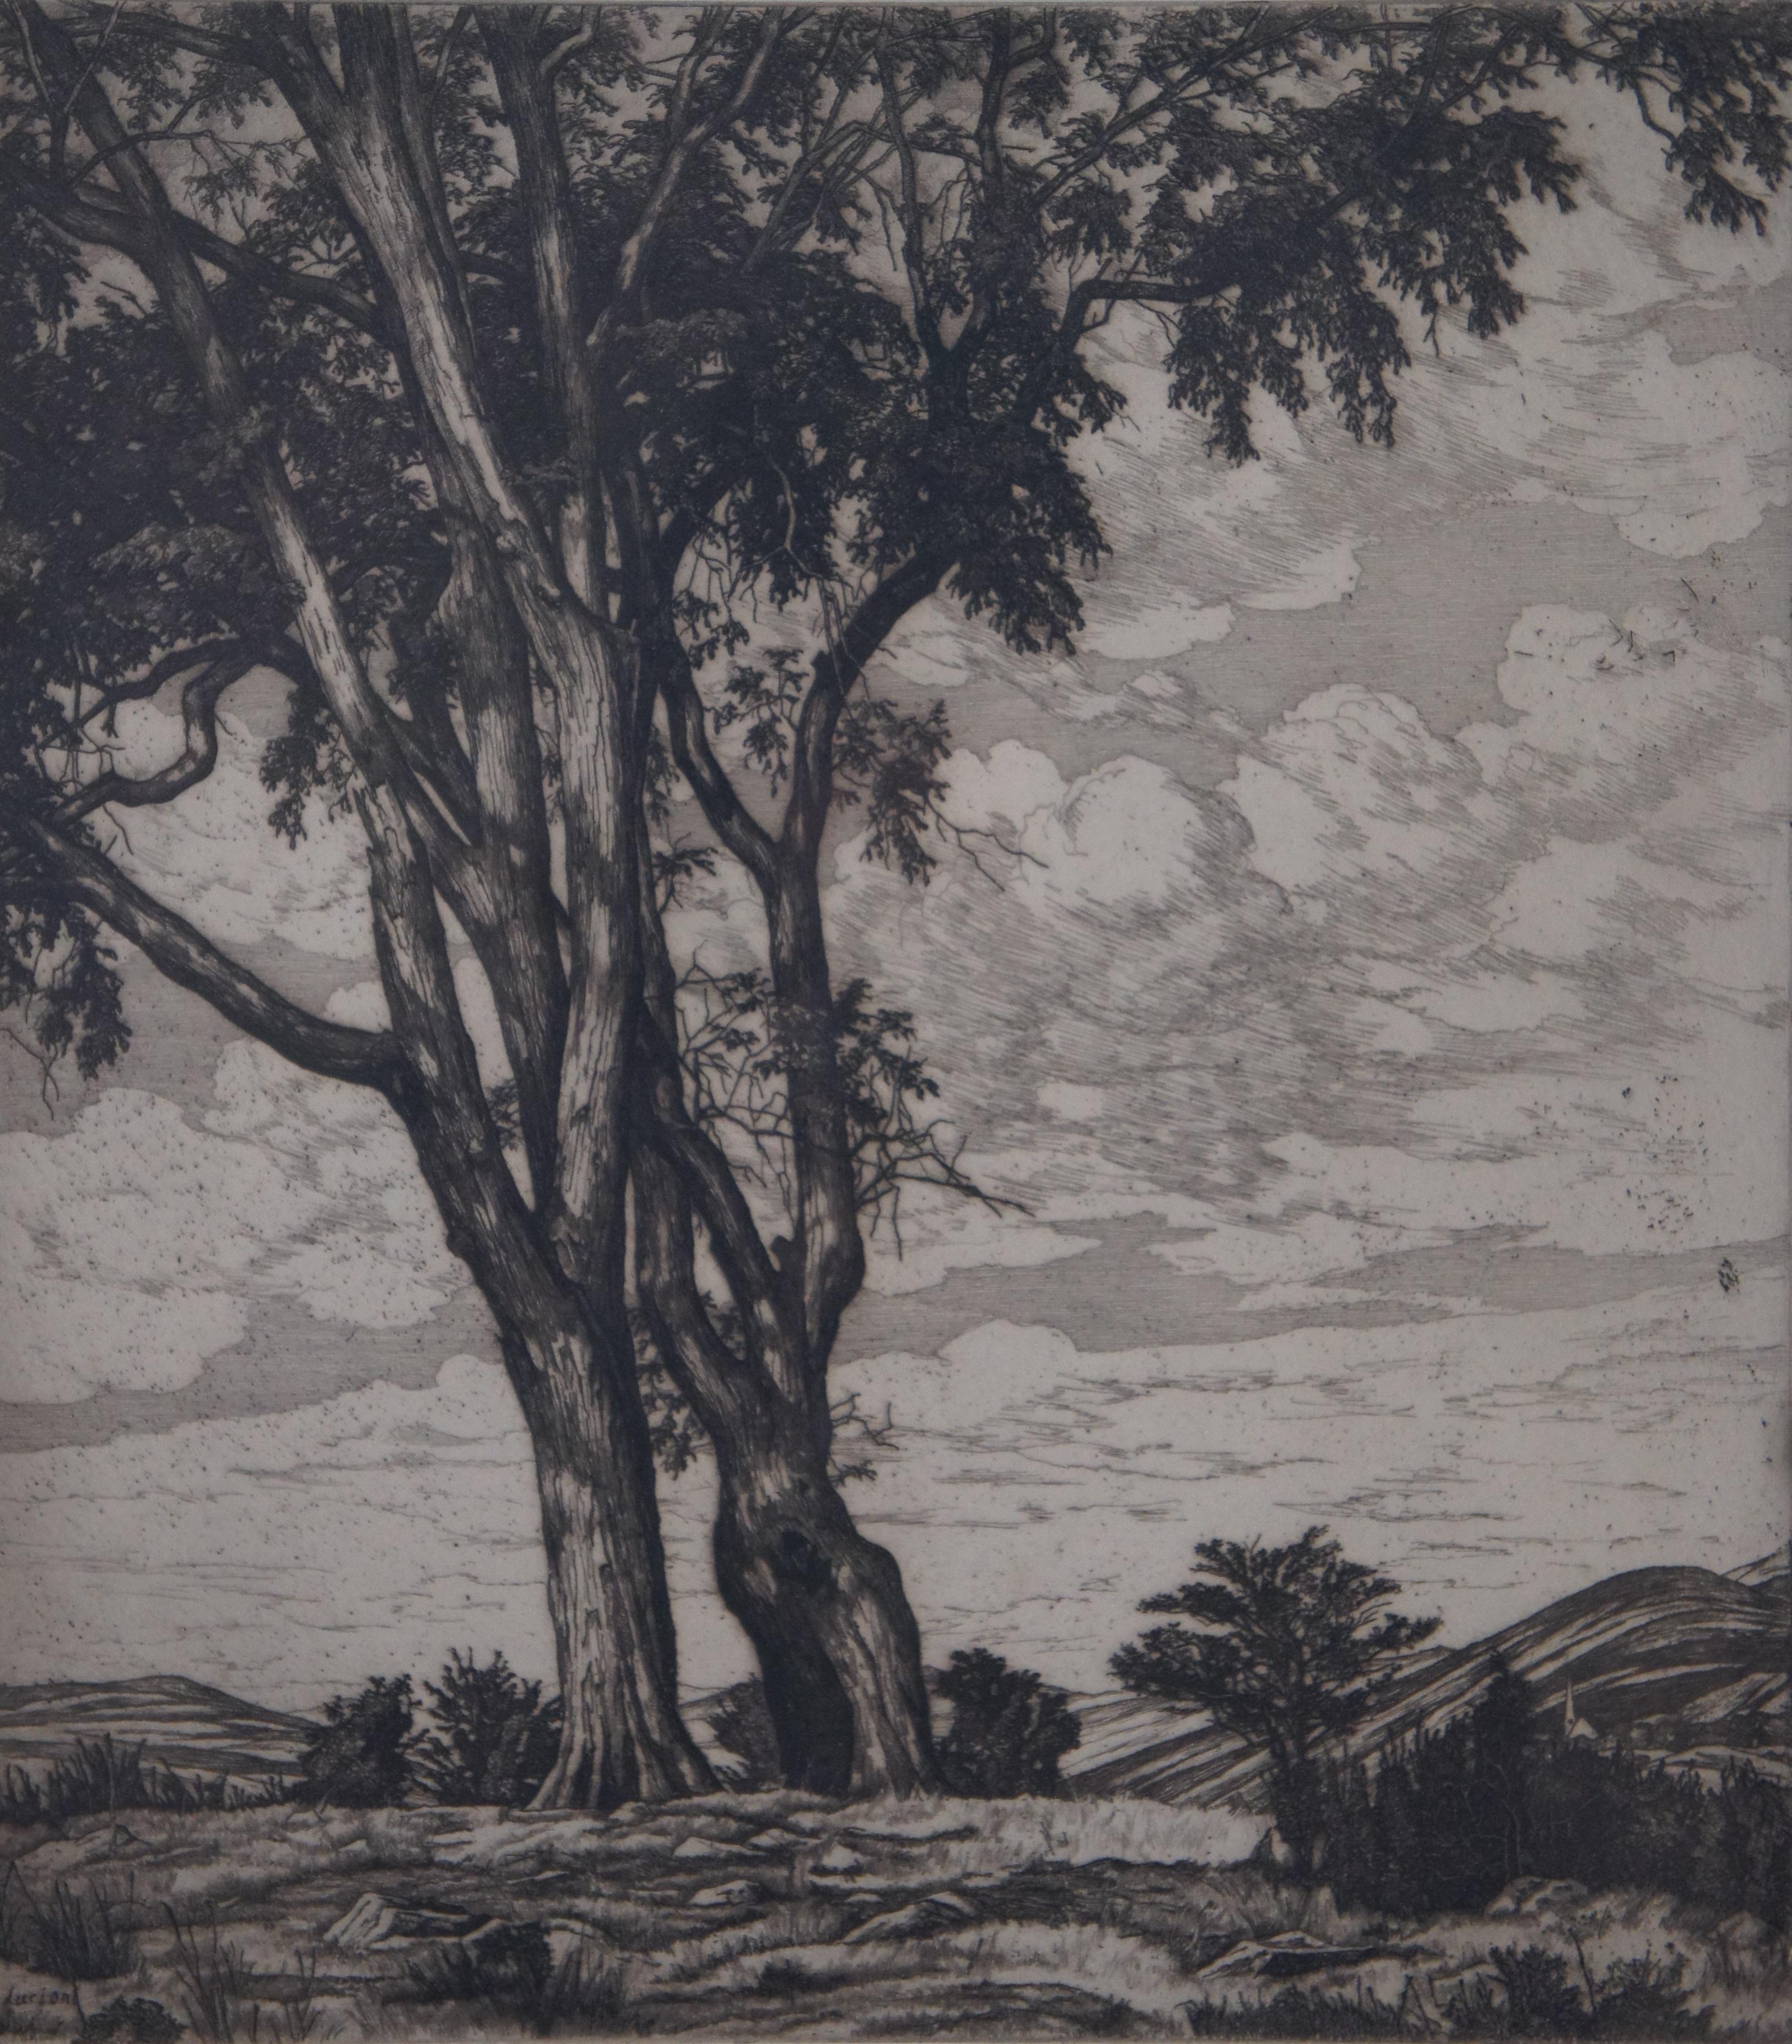 Midcentury Luigi Lucioni Hilltop Elms Tree Landscape Etching, 1955  2